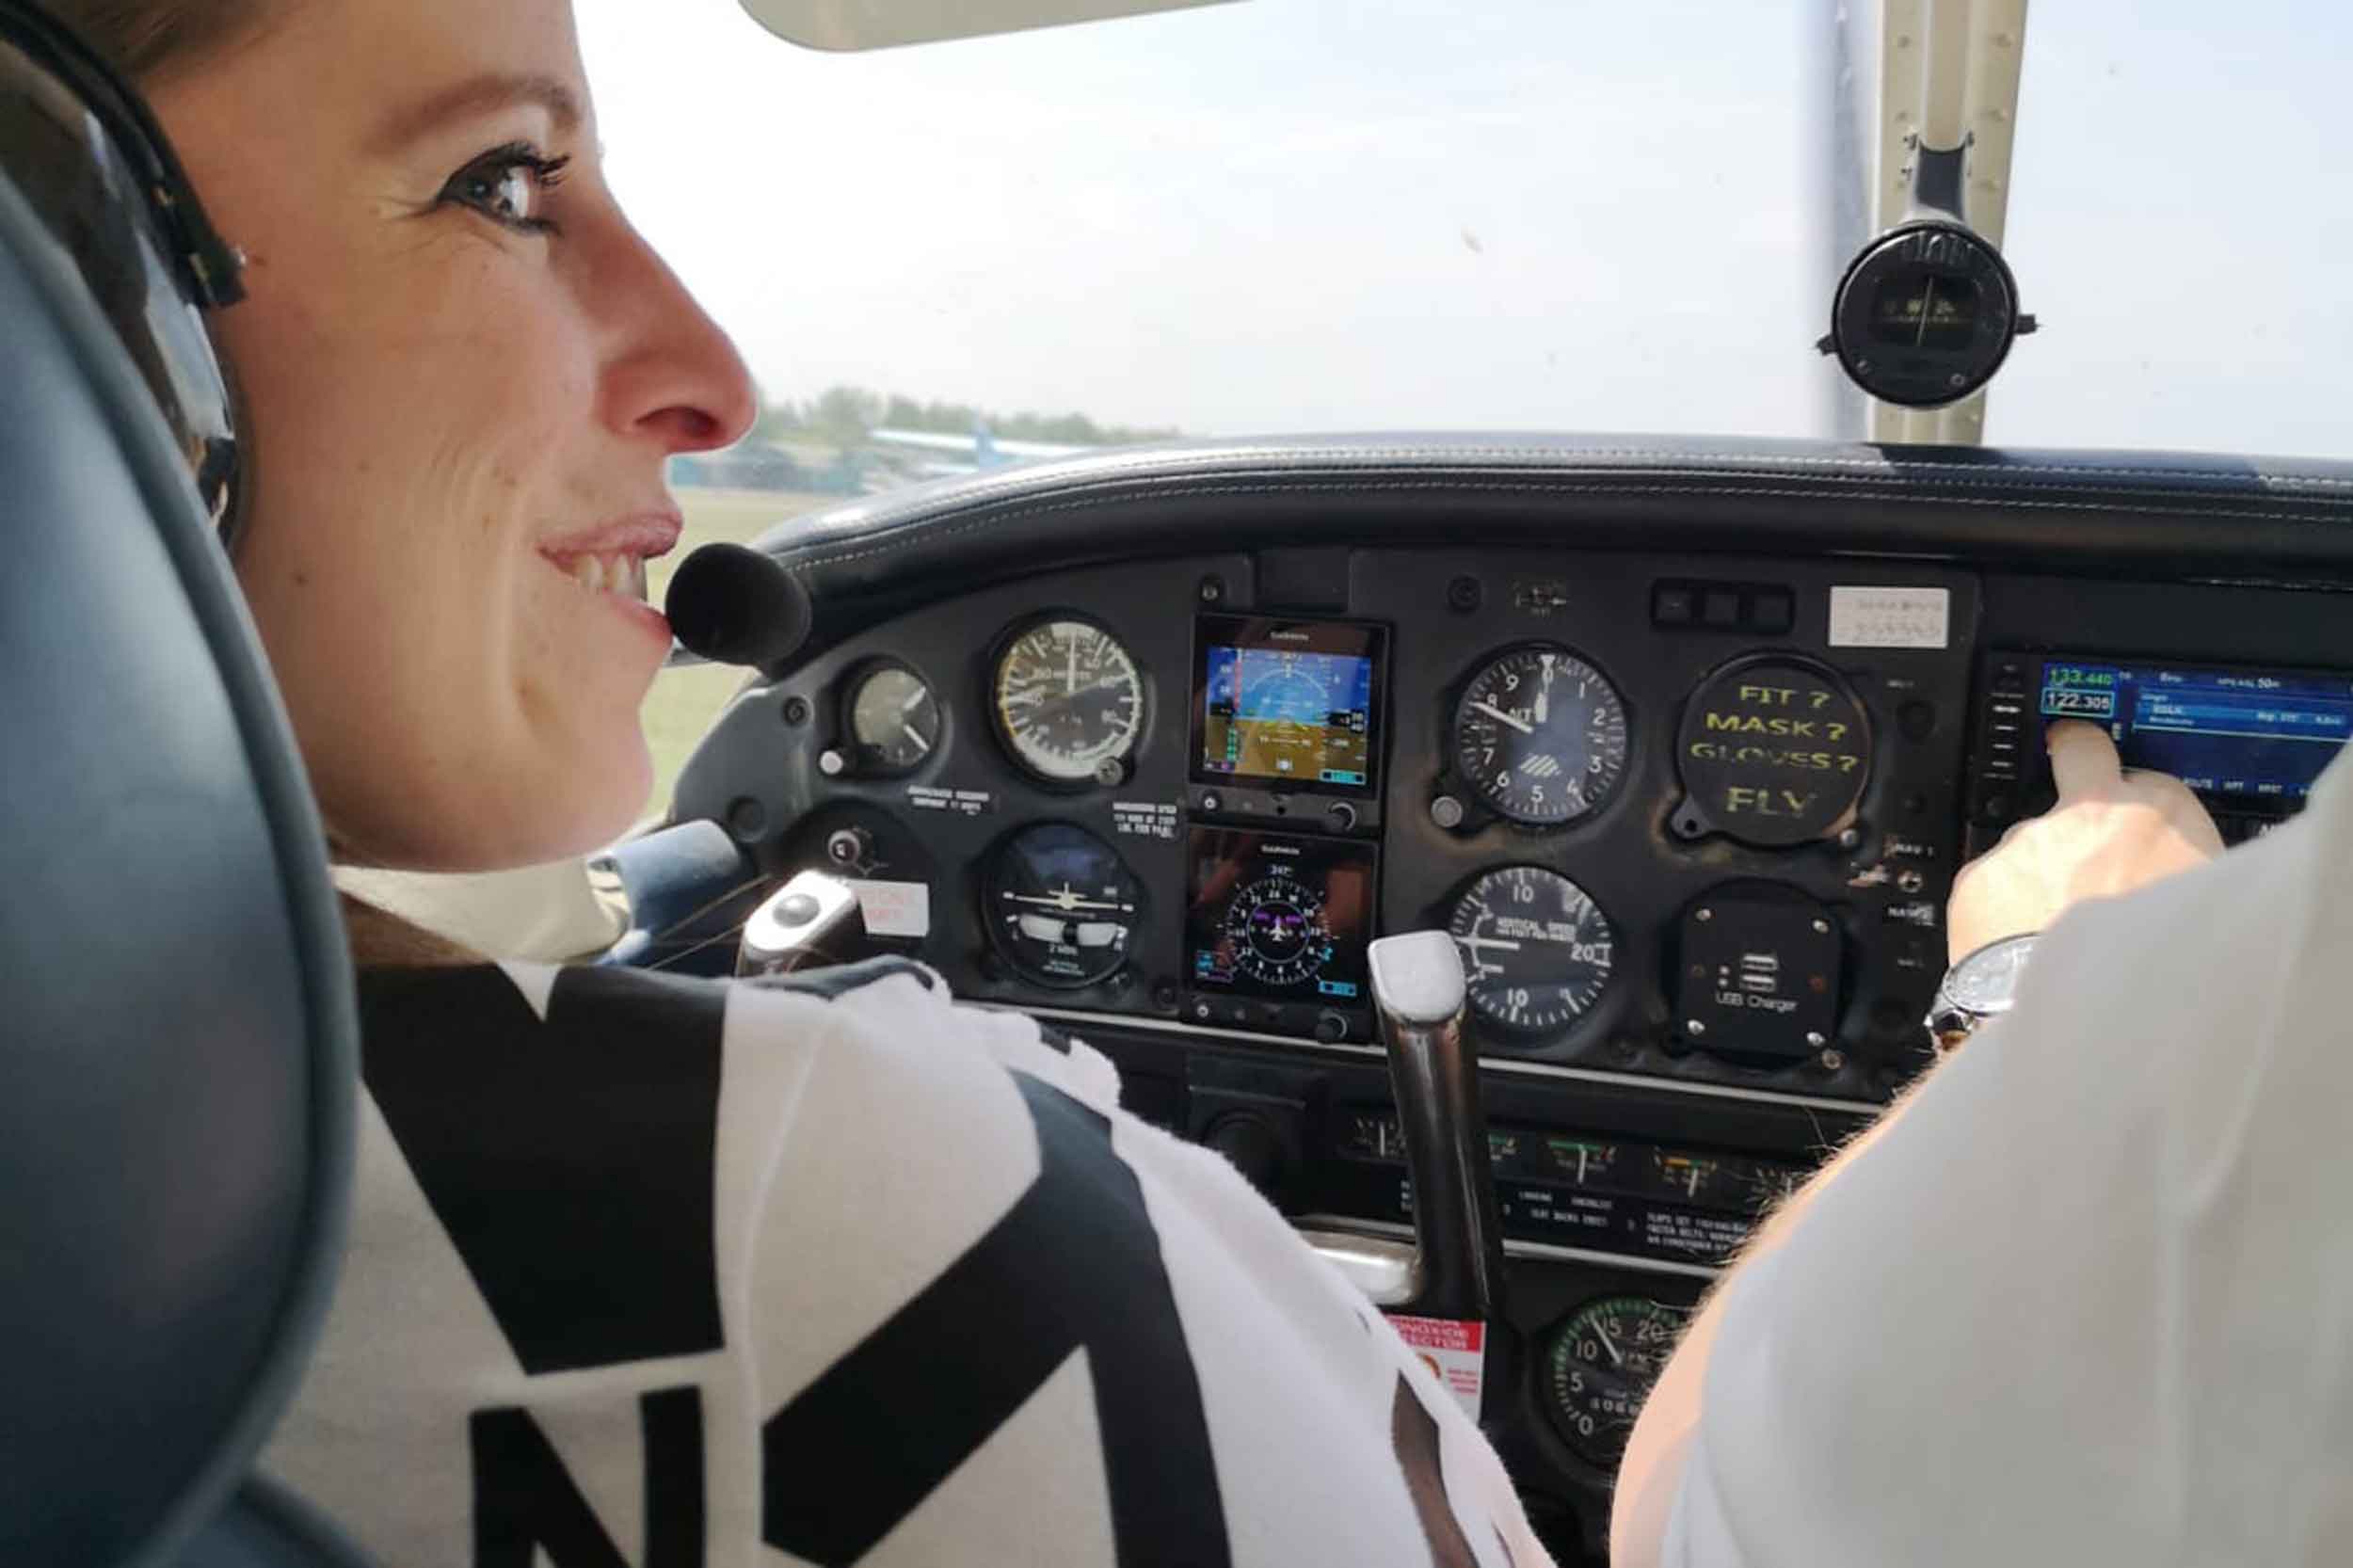 Former scholarship winner Malky during her flight. Photos: Aerobility